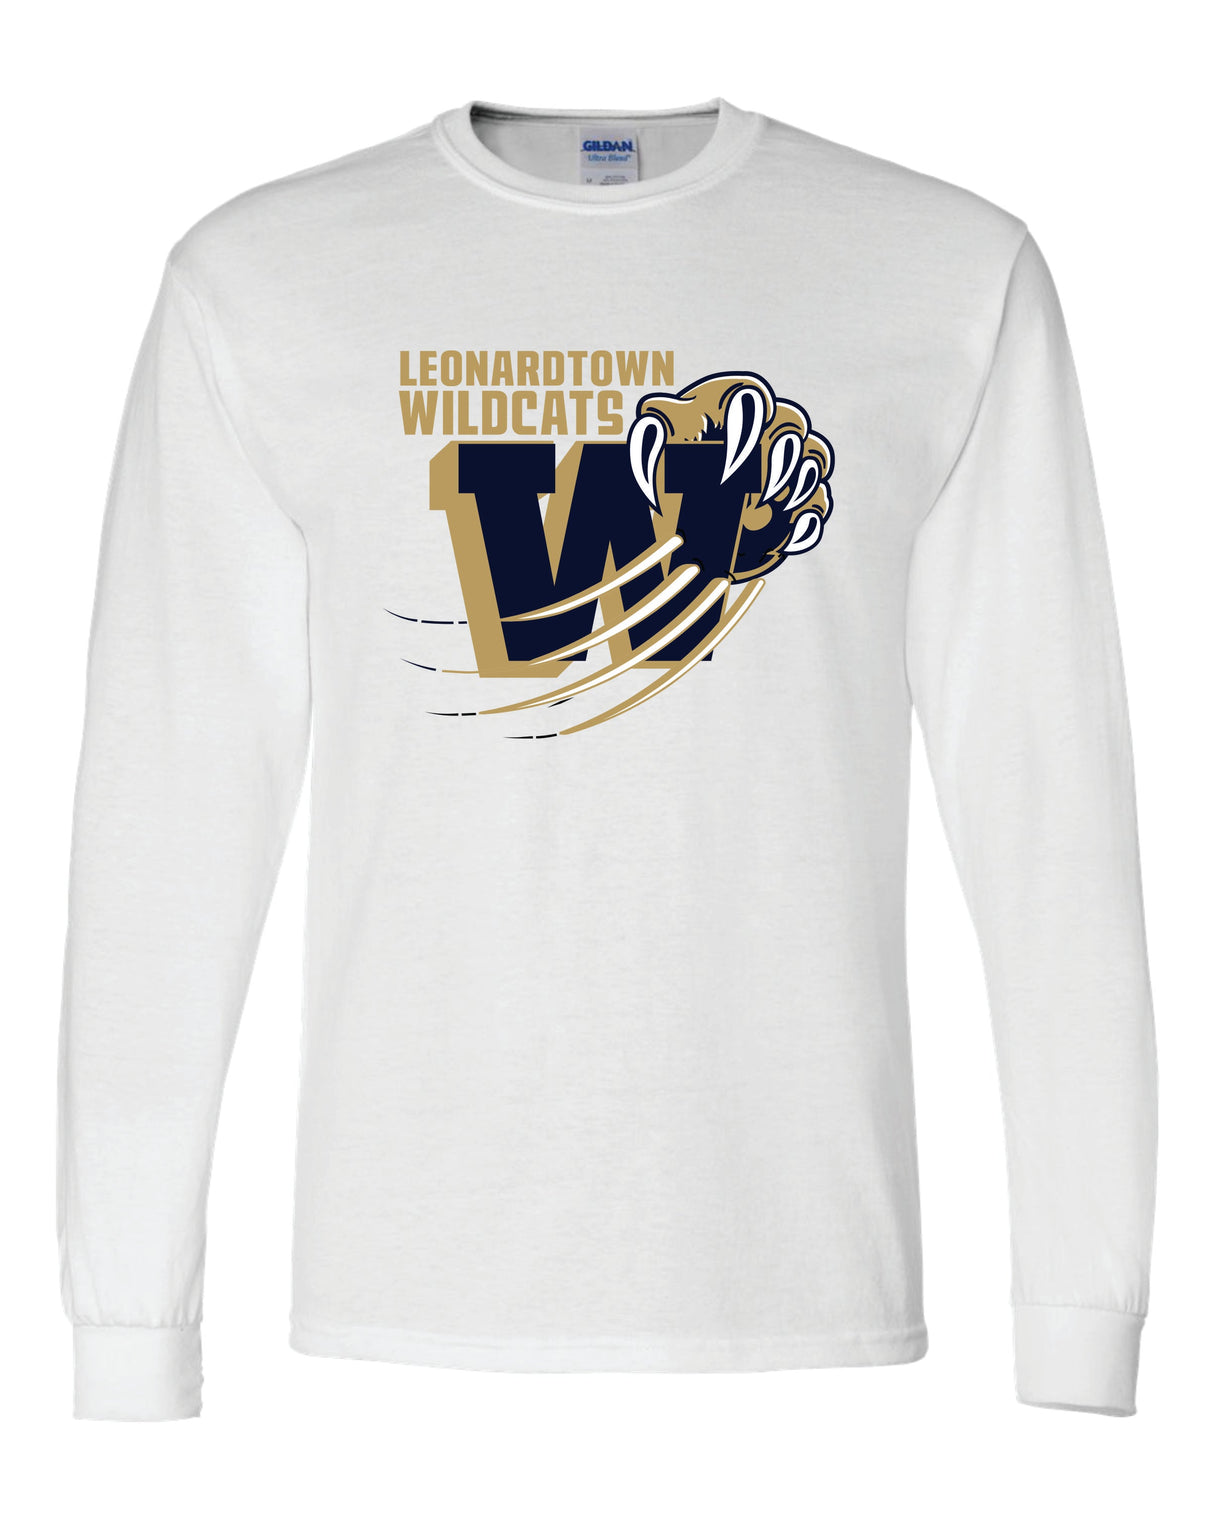 Leonardtown Wildcats 50/50 Long Sleeve T-Shirts YOUTH